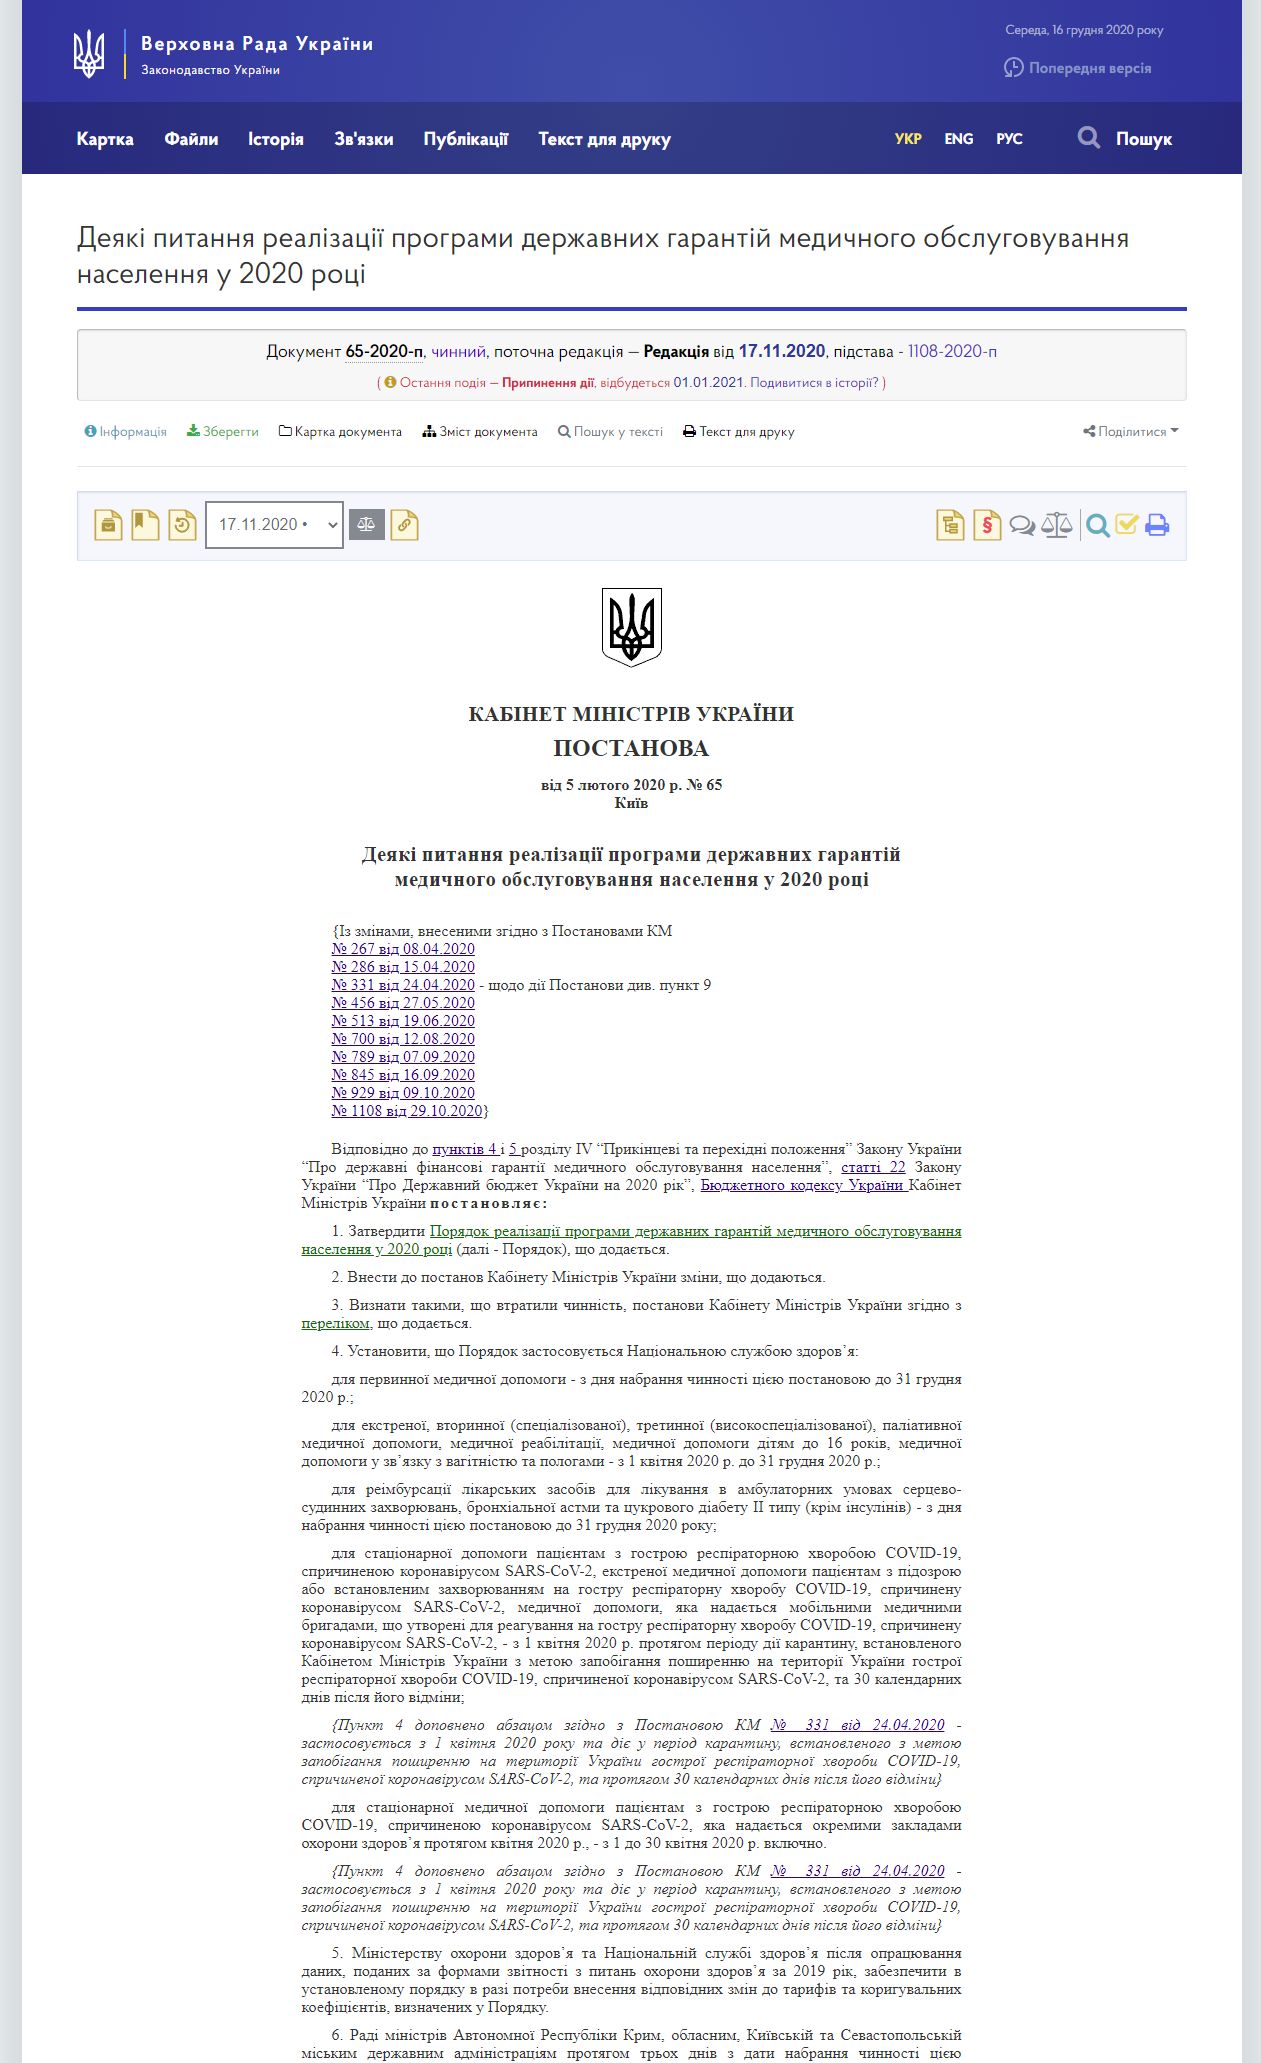 https://zakon.rada.gov.ua/laws/show/65-2020-%D0%BF#n298